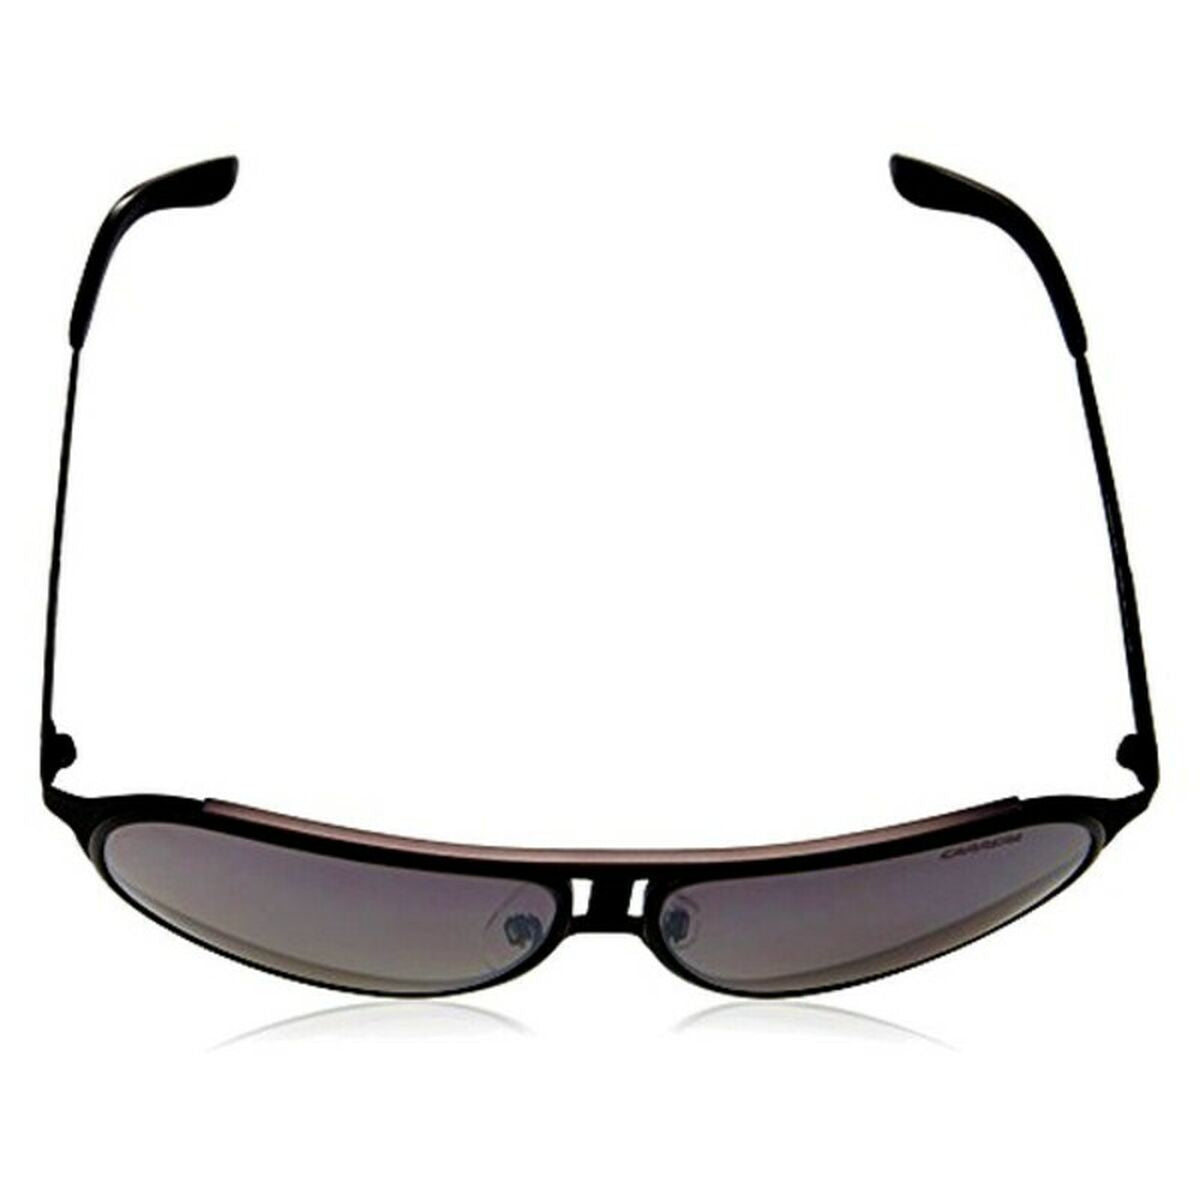 Men's Sunglasses Carrera 100/S MI HKQ